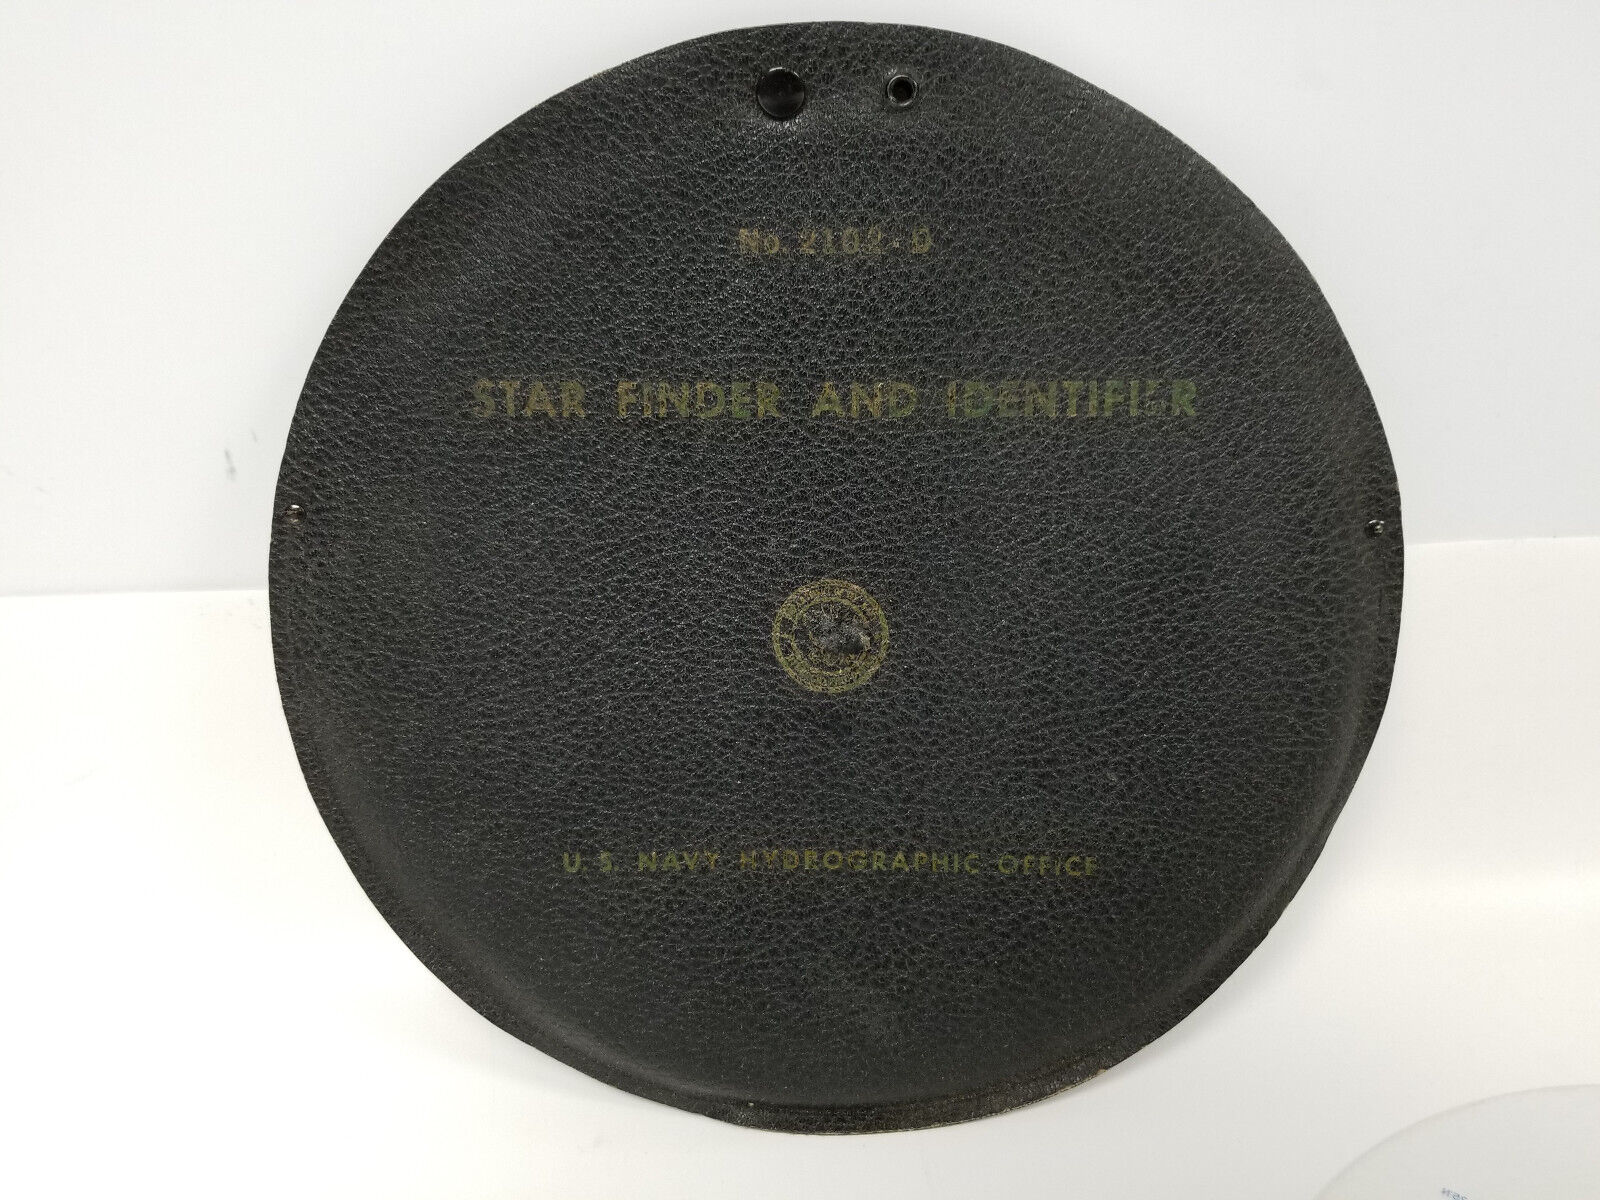 Vintage 1961 Star Finder and Identifier No 2102-D U.S. Navy Hydrographic Office